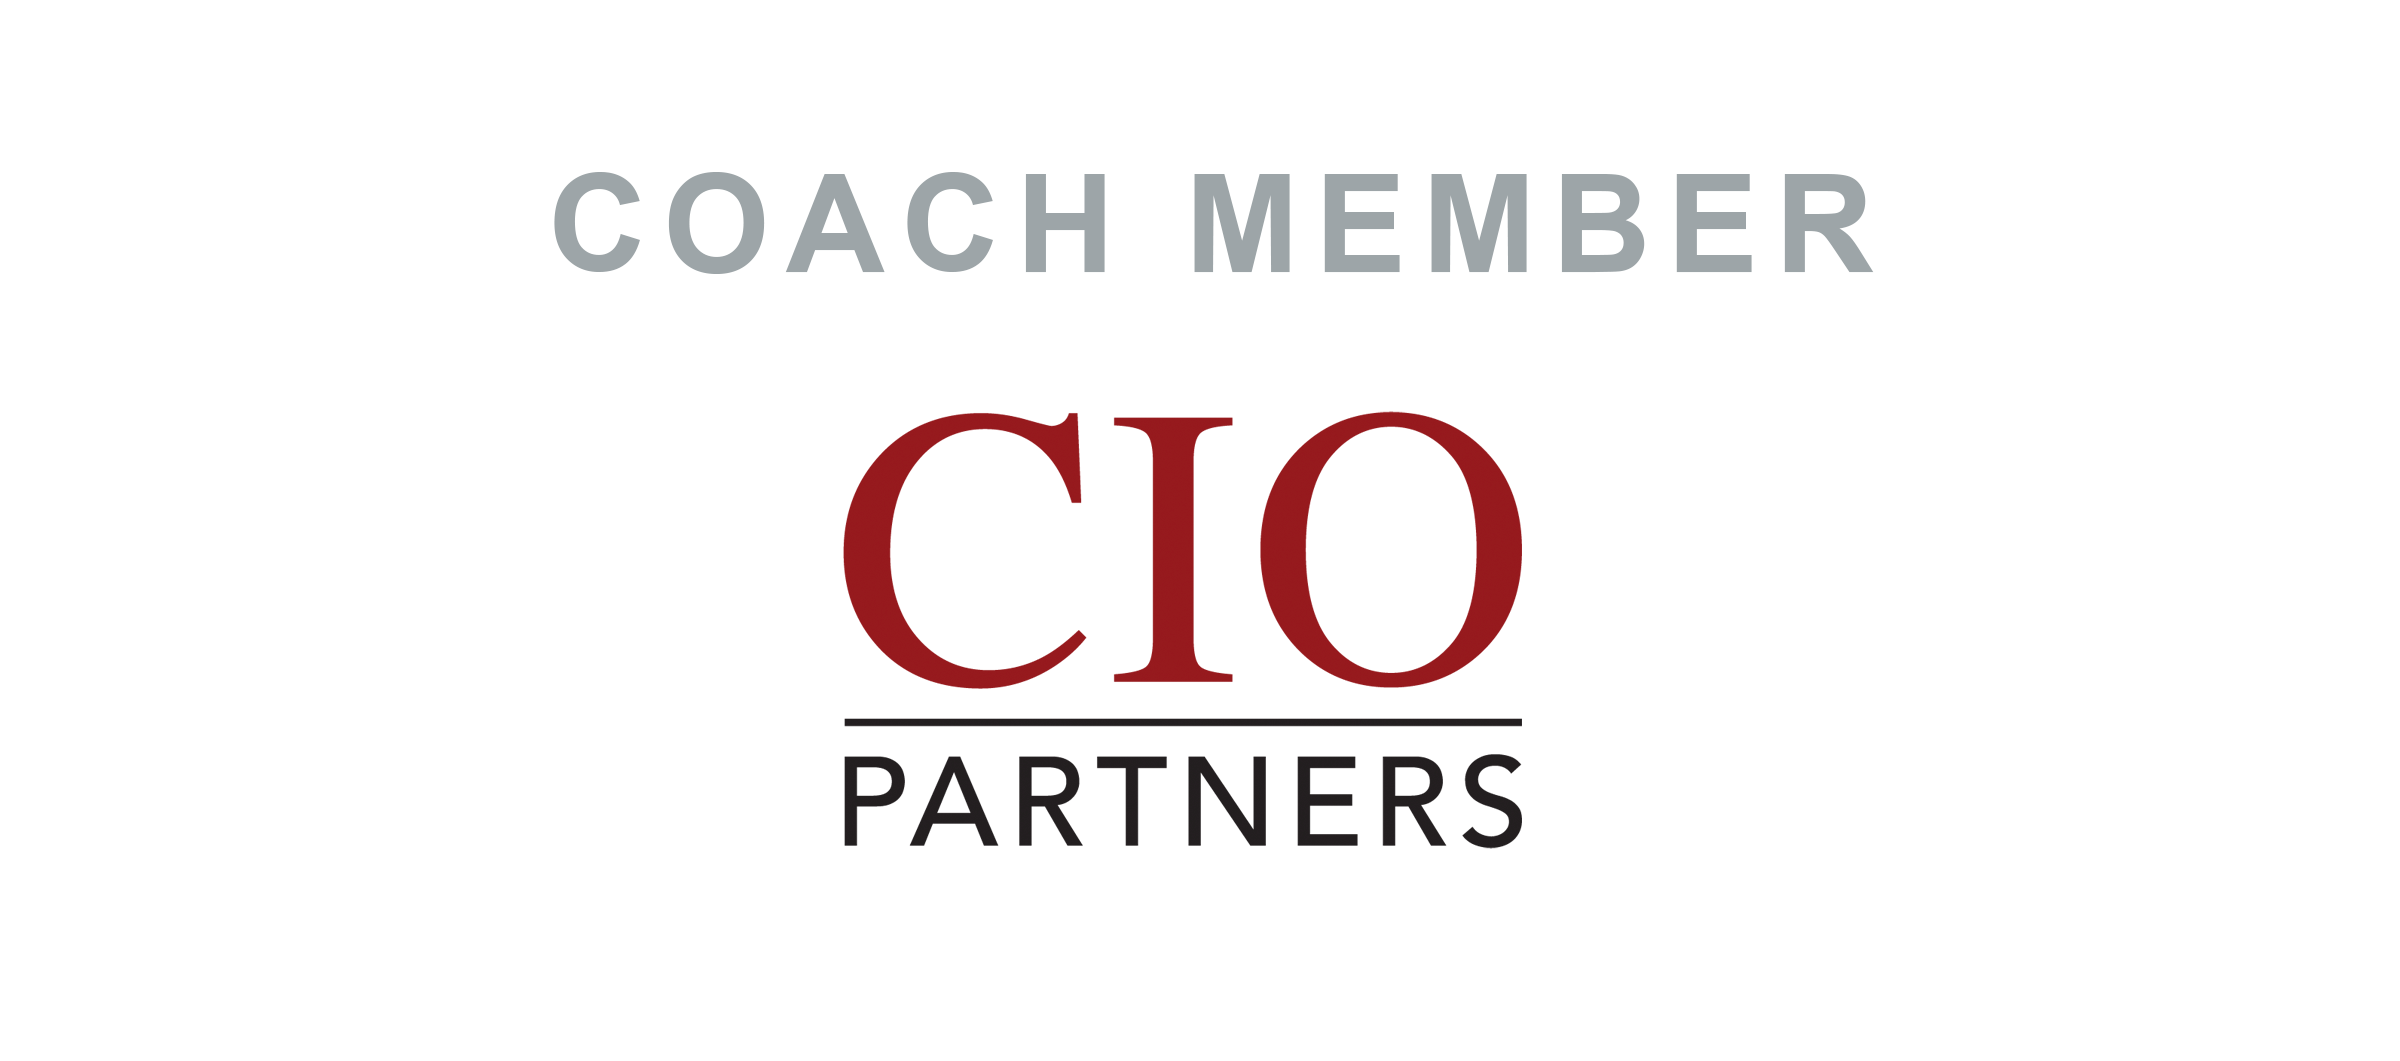 CIO Partners